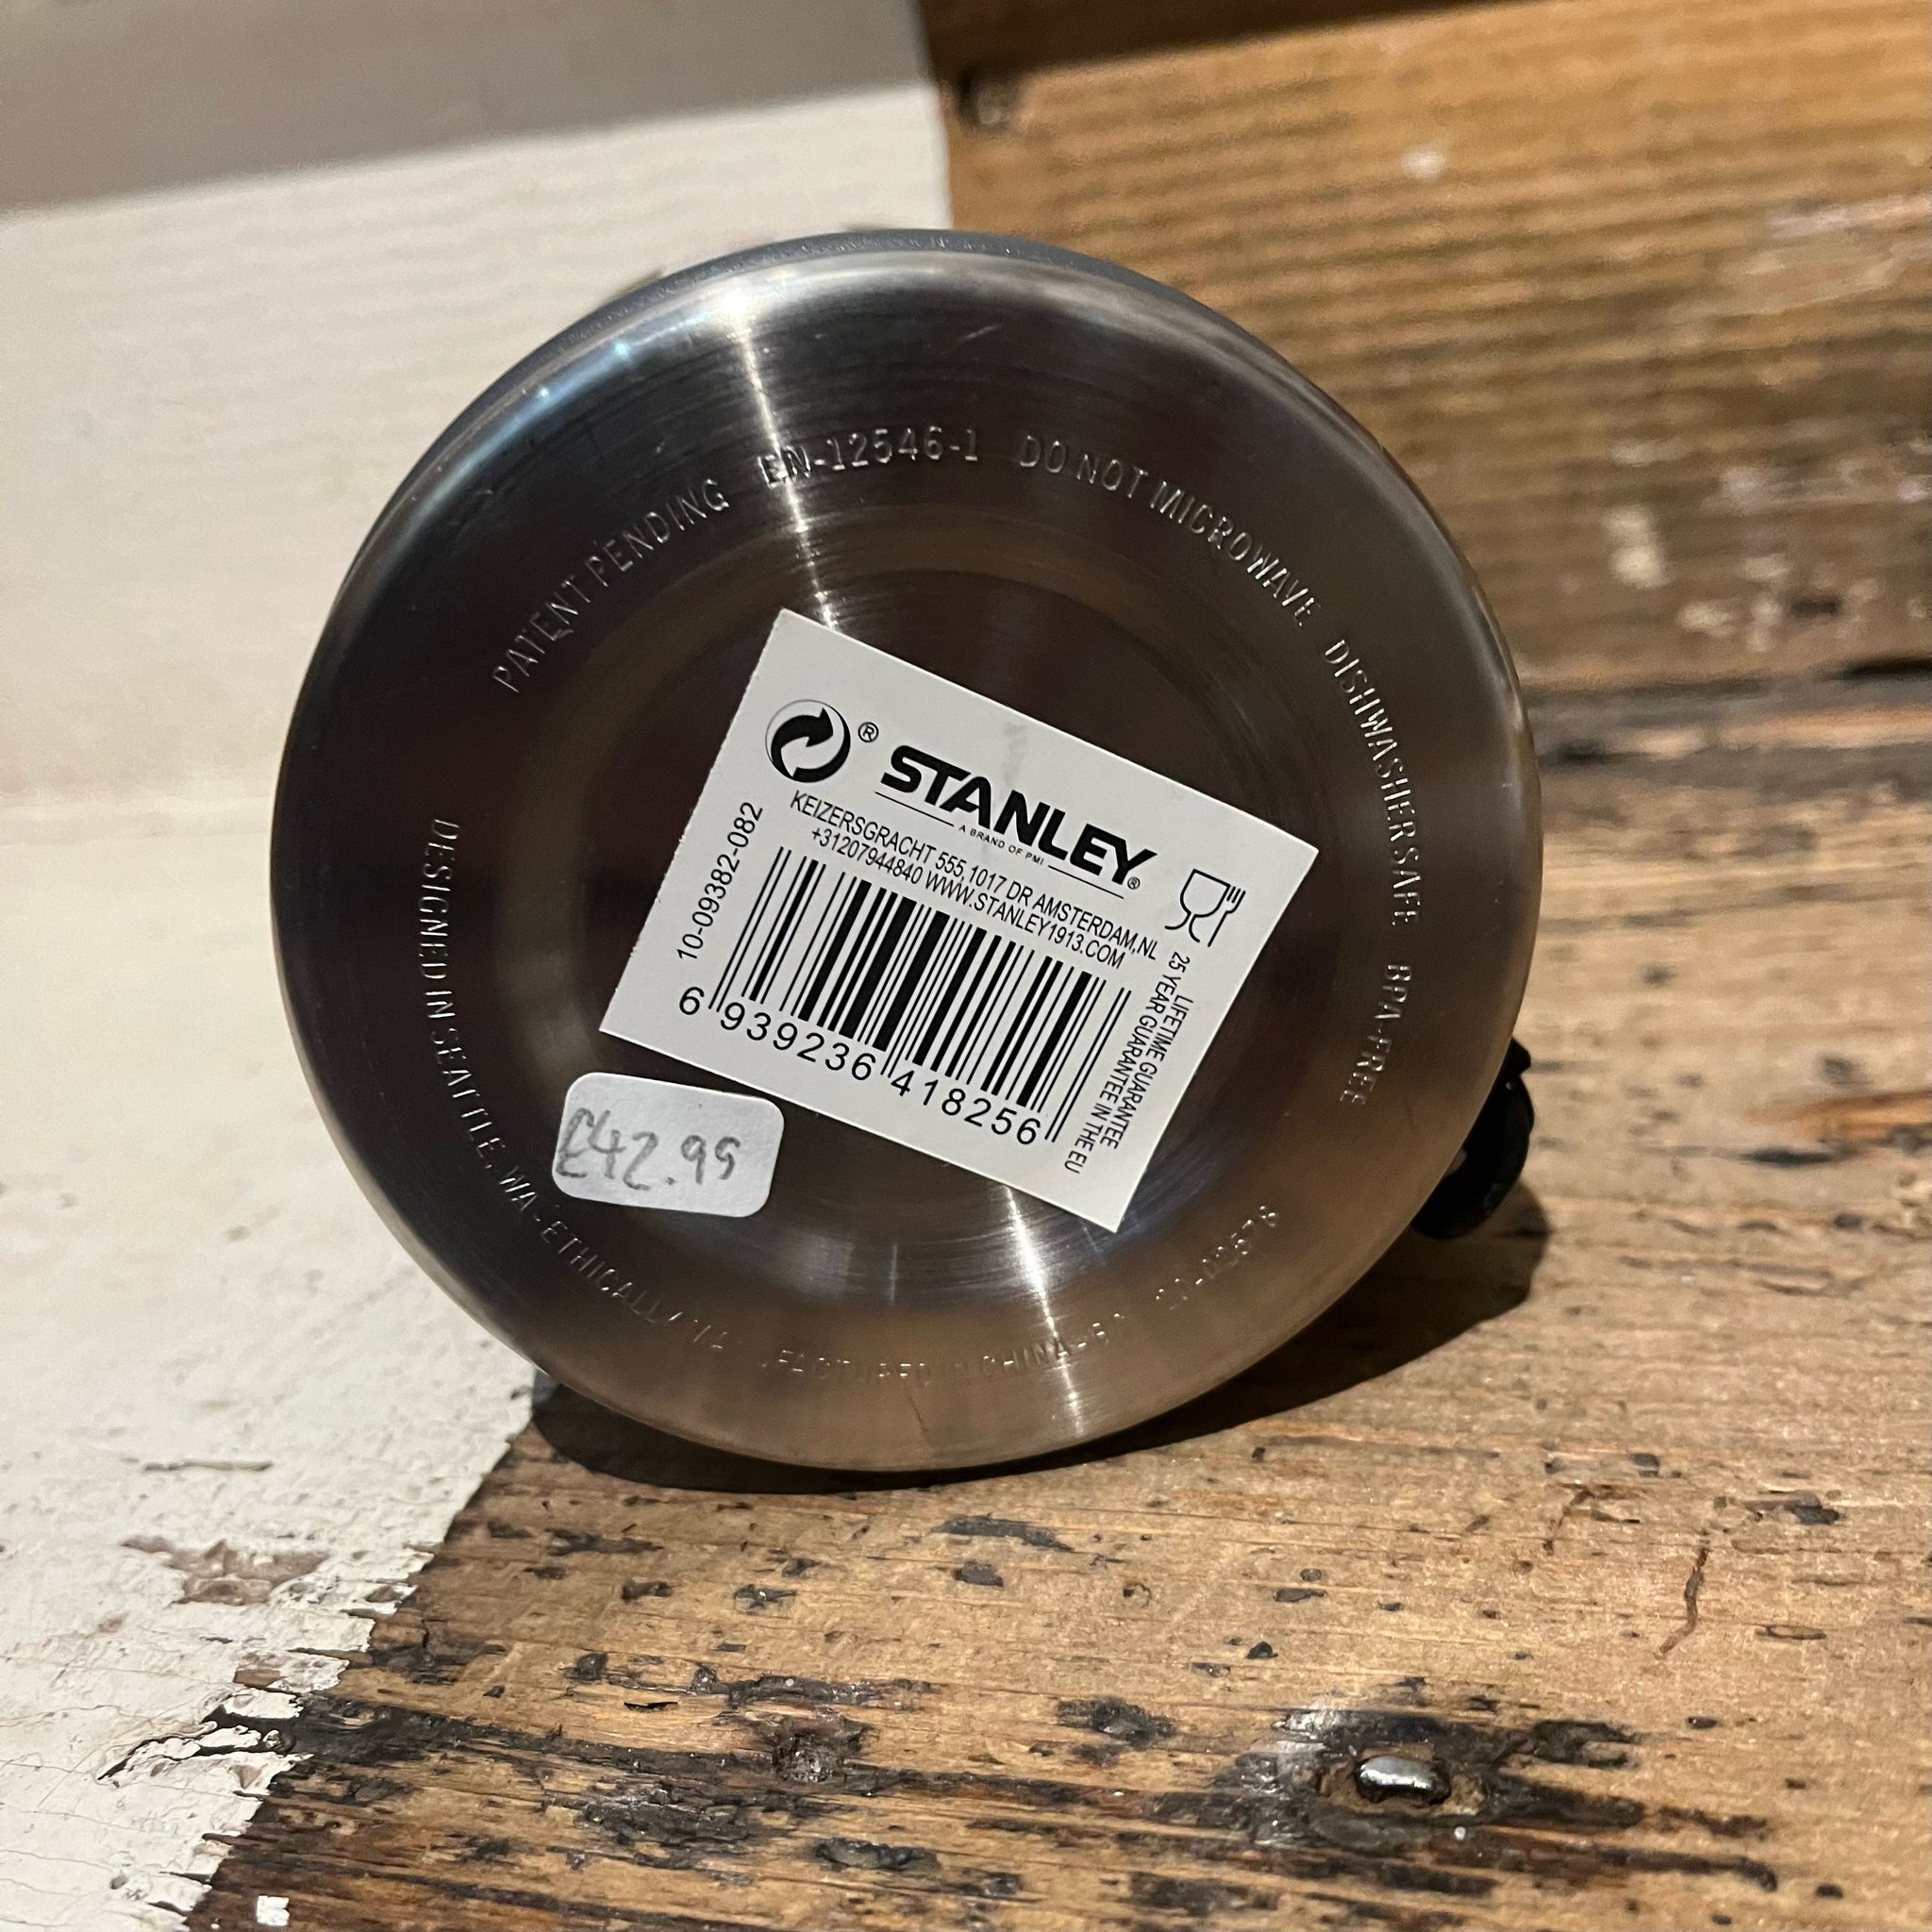 Stanley - Legendary Vacuum Food Jar - 14oz - Grey